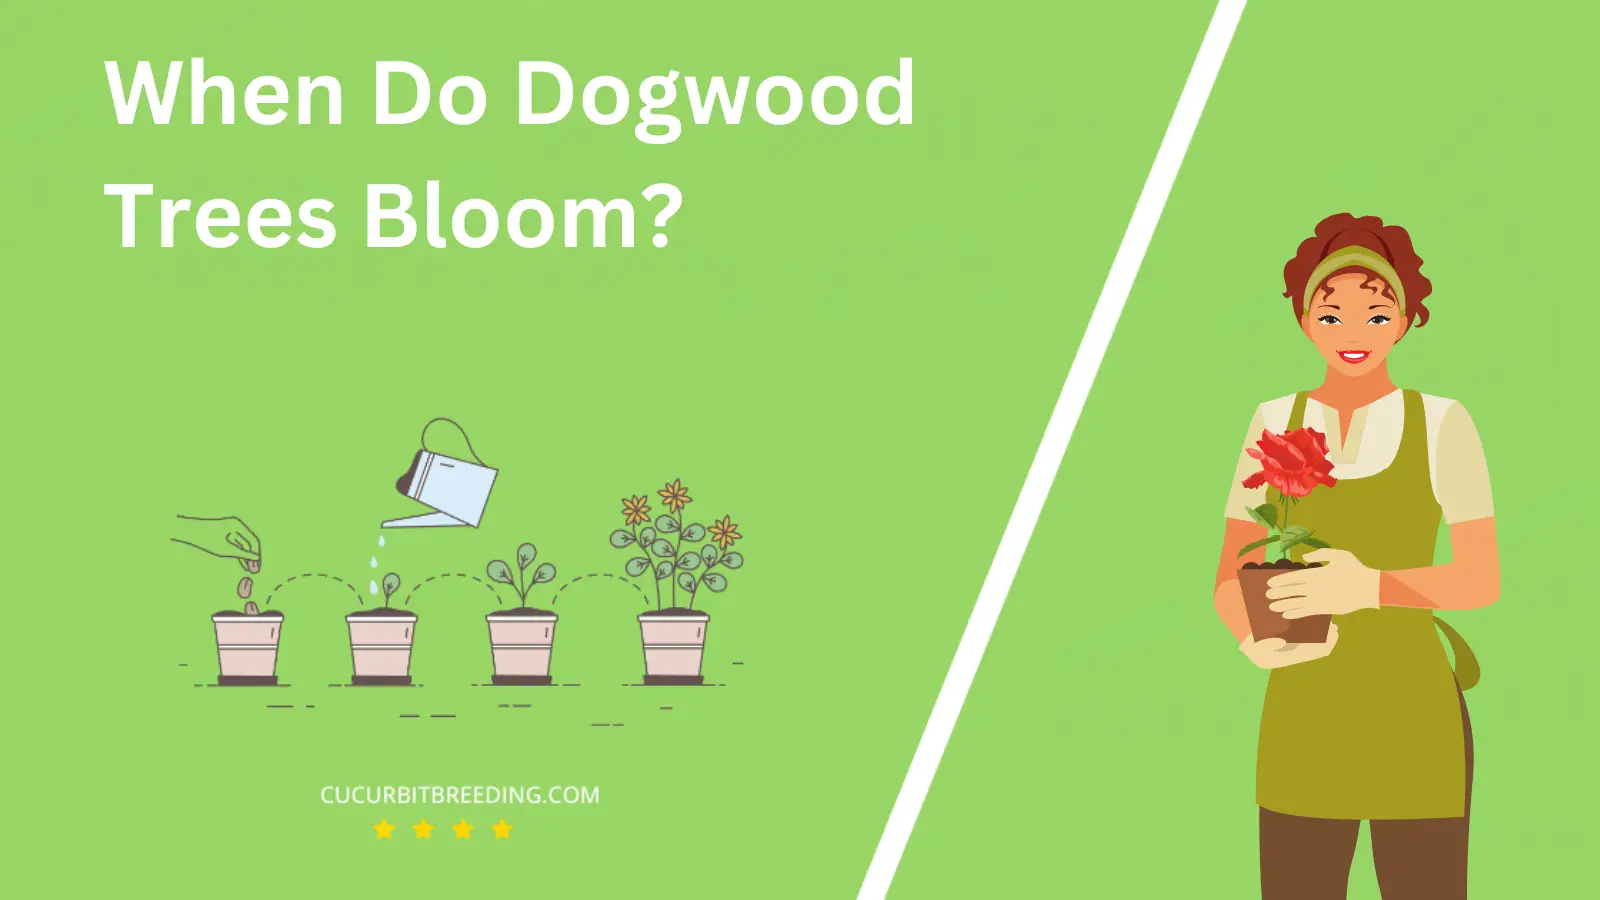 When Do Dogwood Trees Bloom?